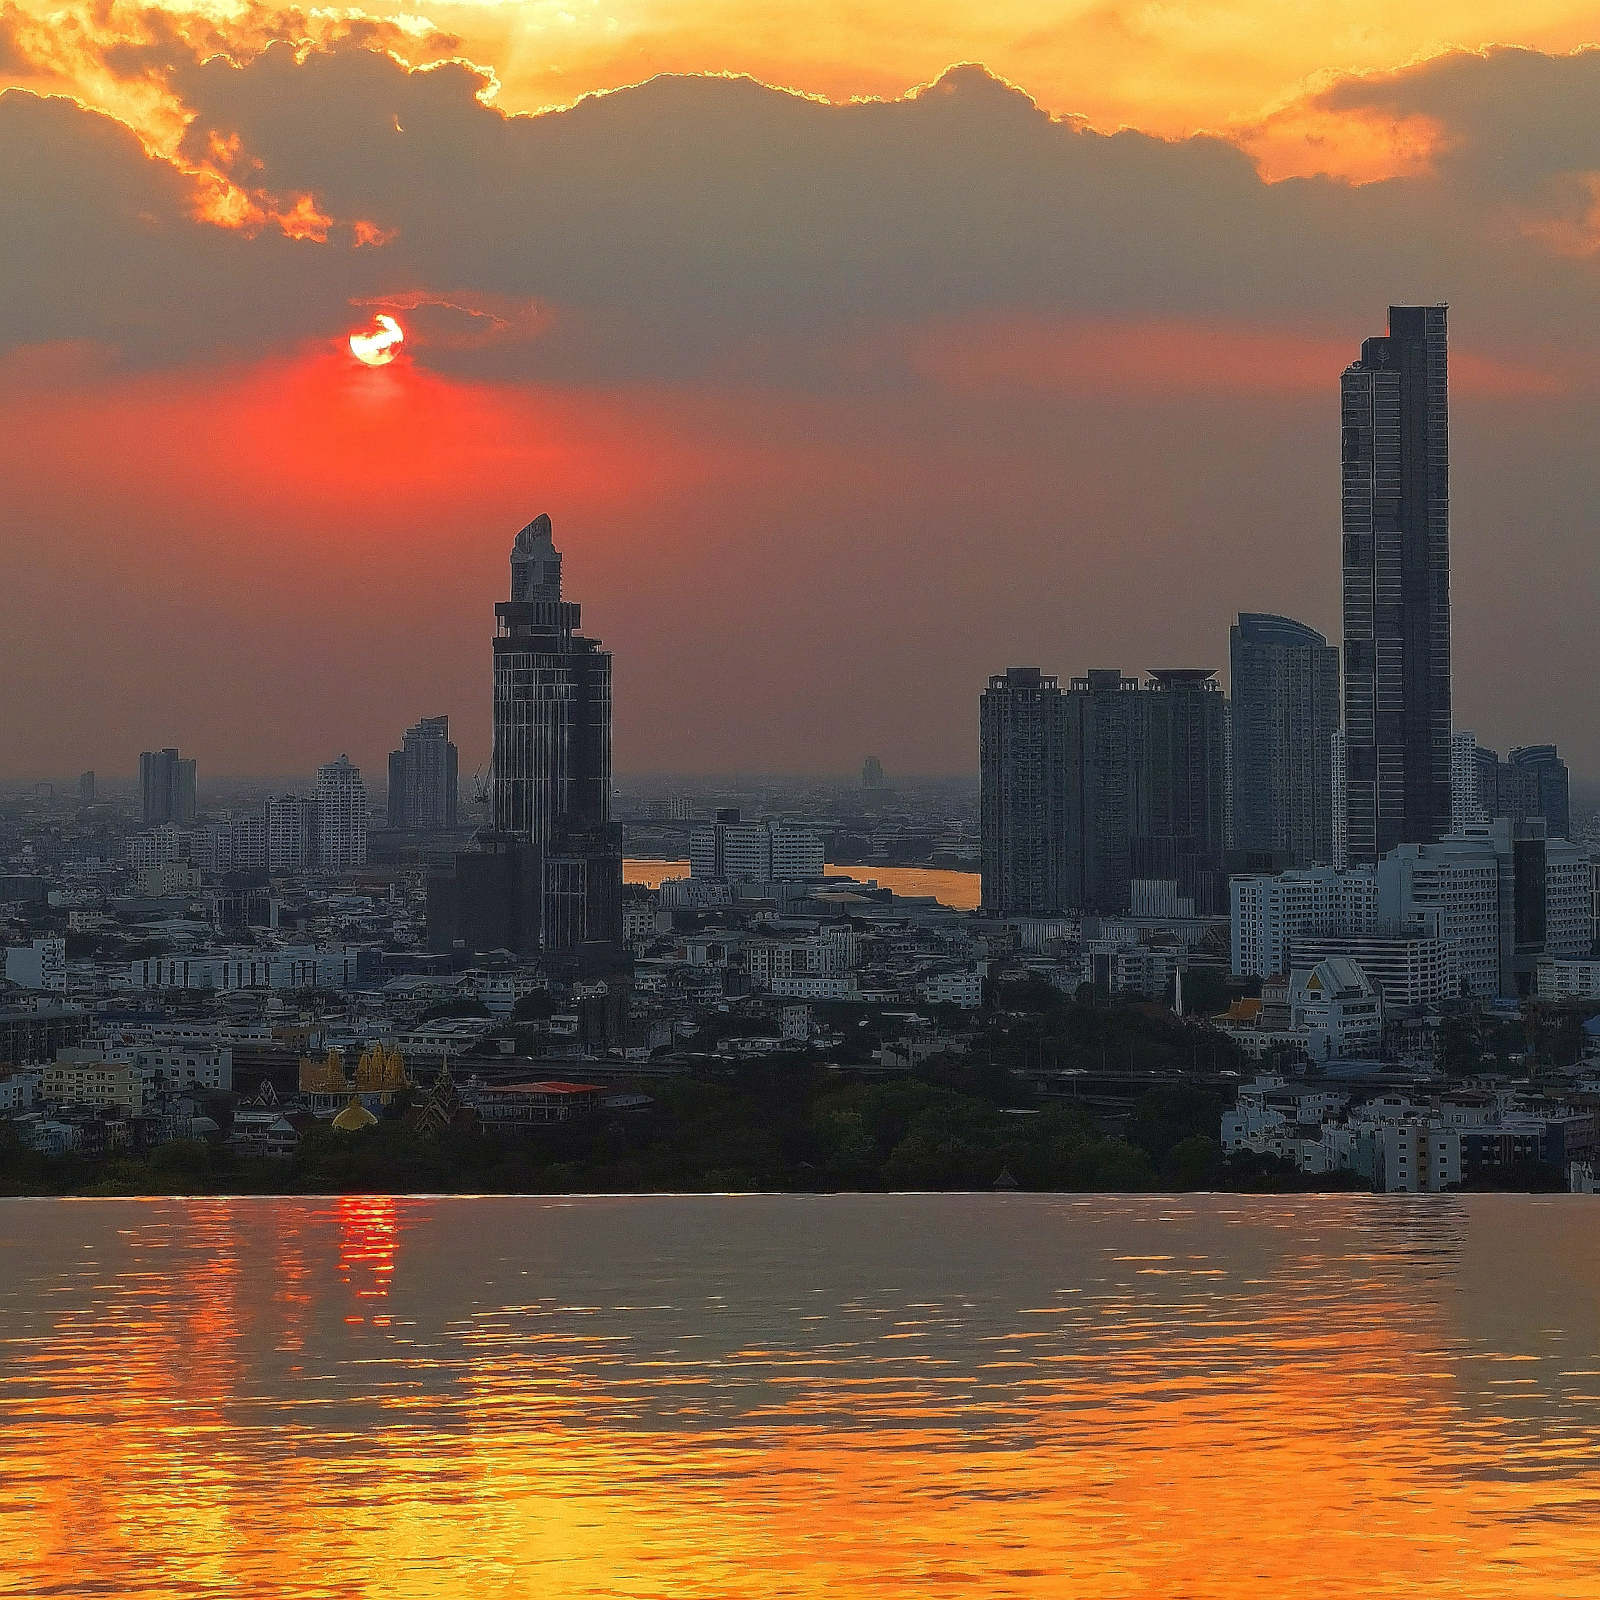 Last sunset of the year - Bangkok